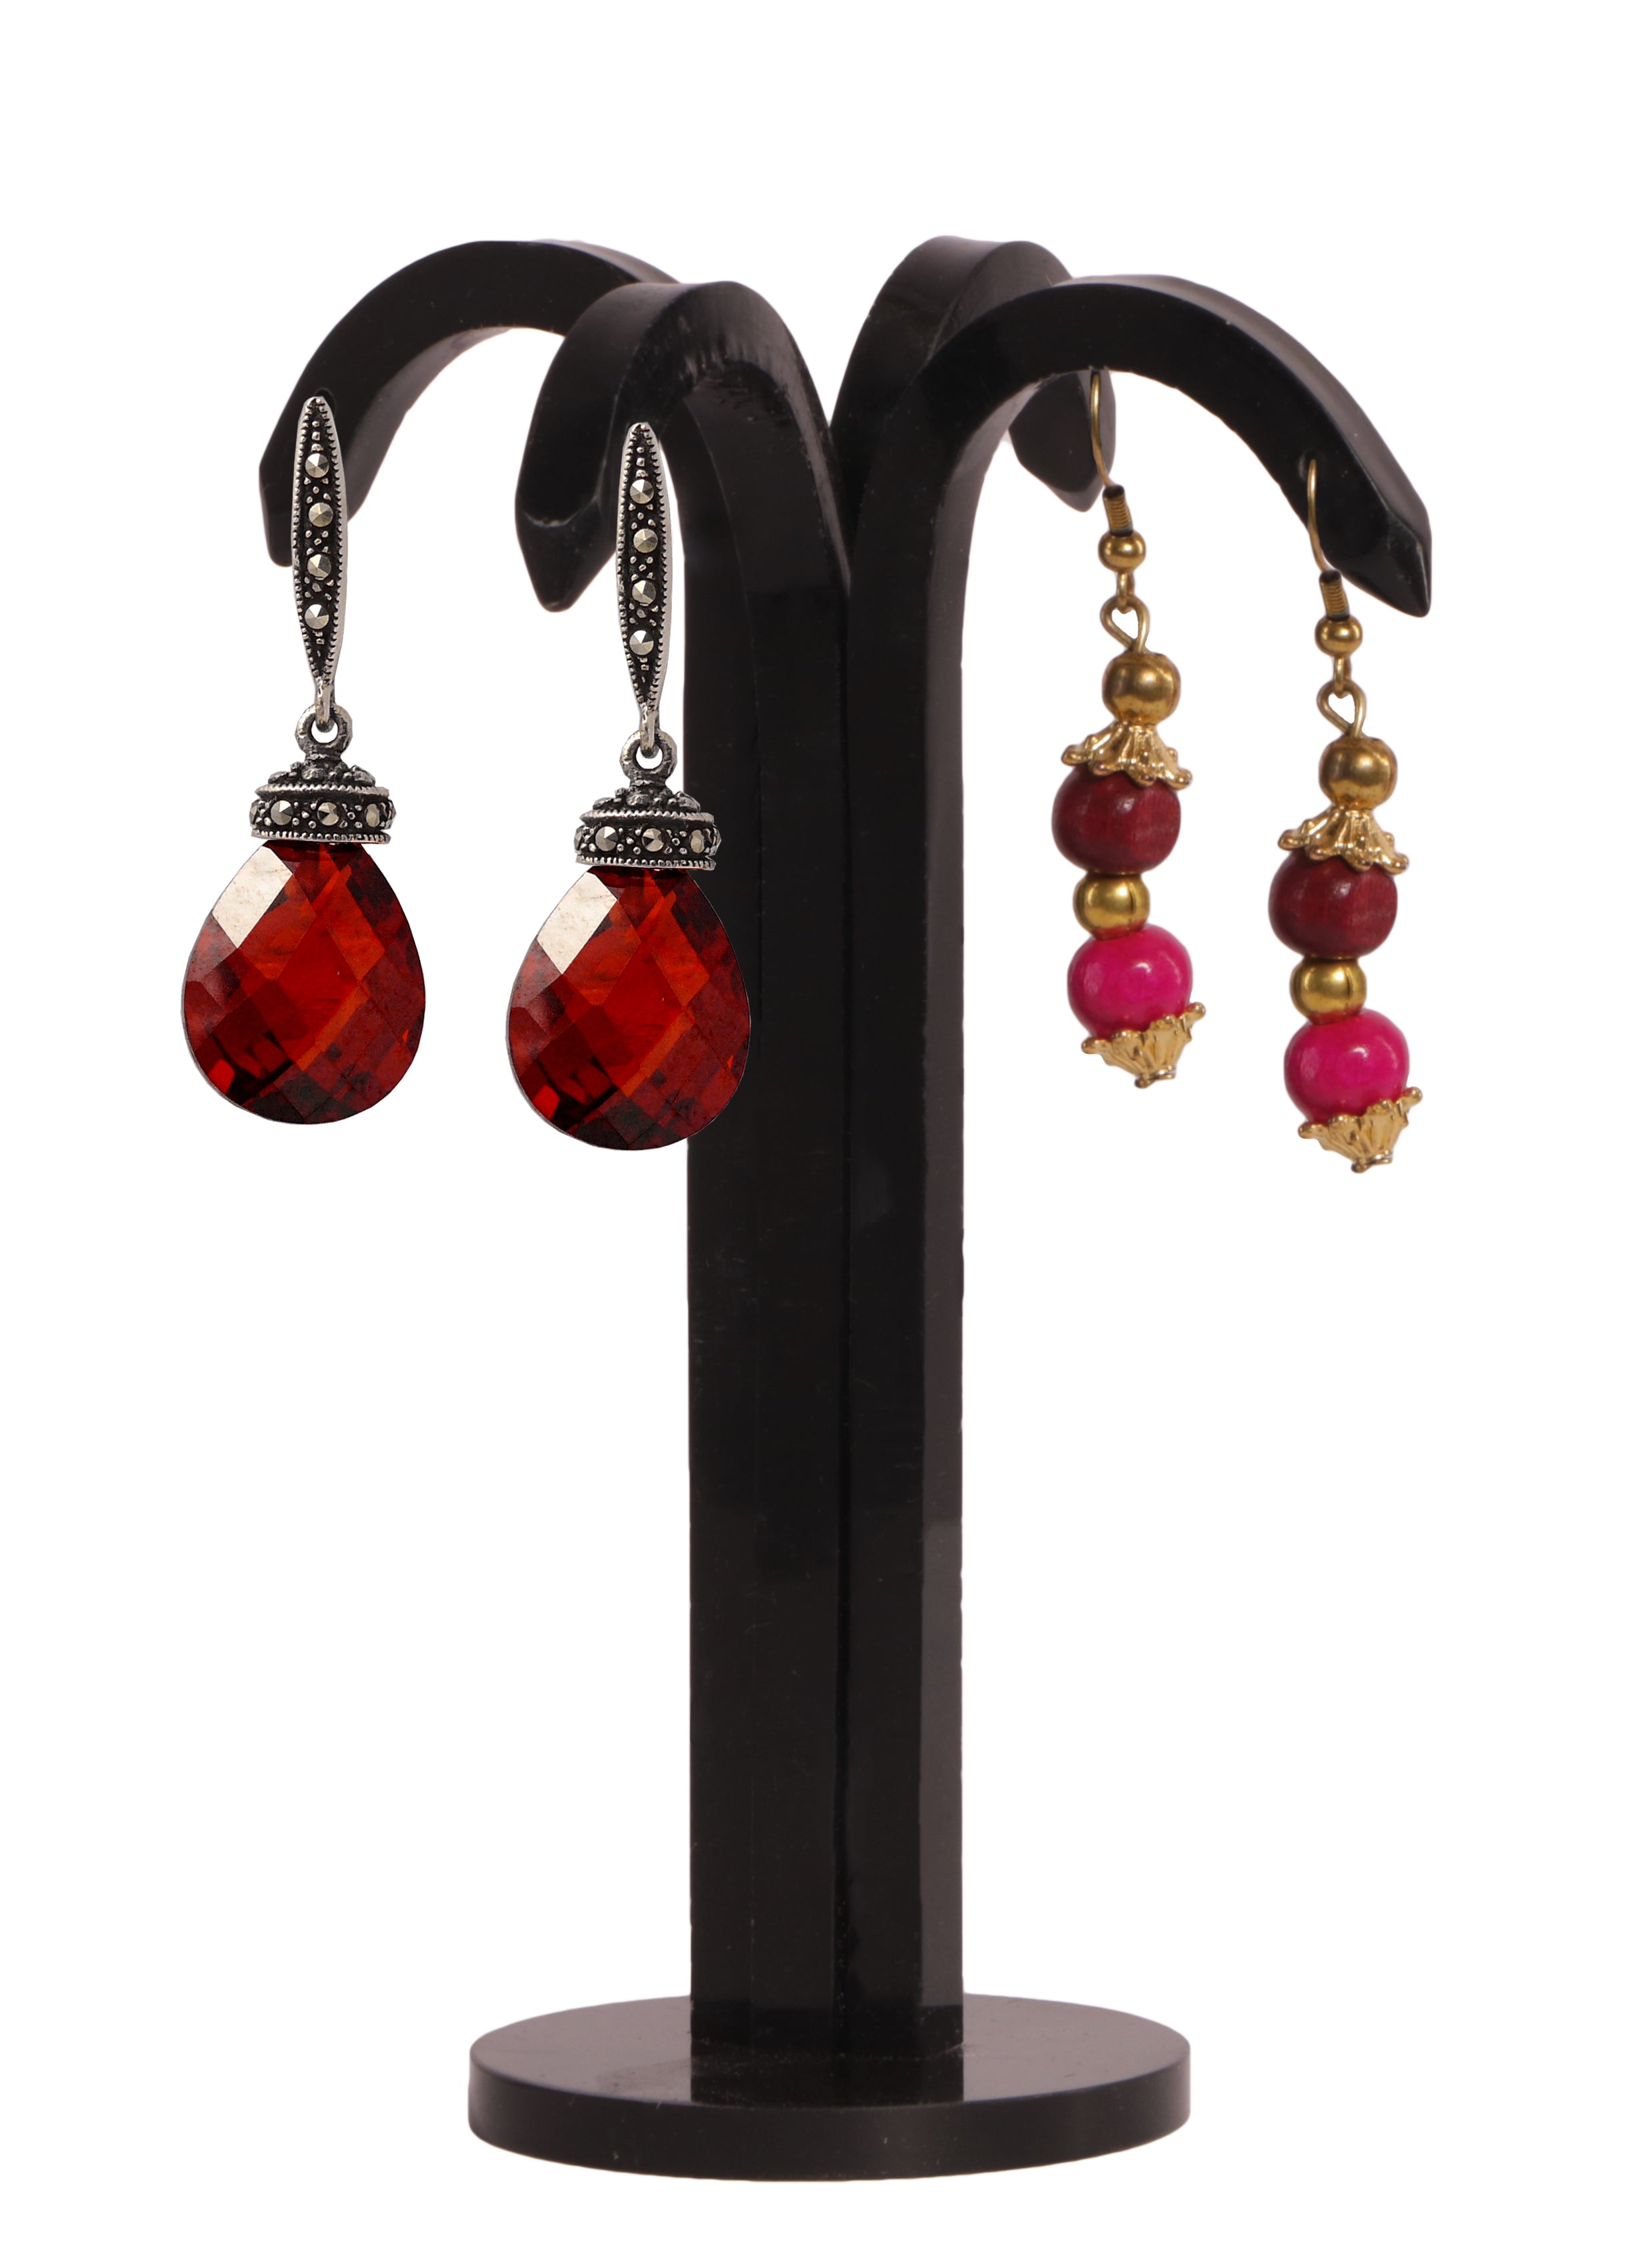 Display Acrylic Earring Stands  Acrylic Earring Stand Folding